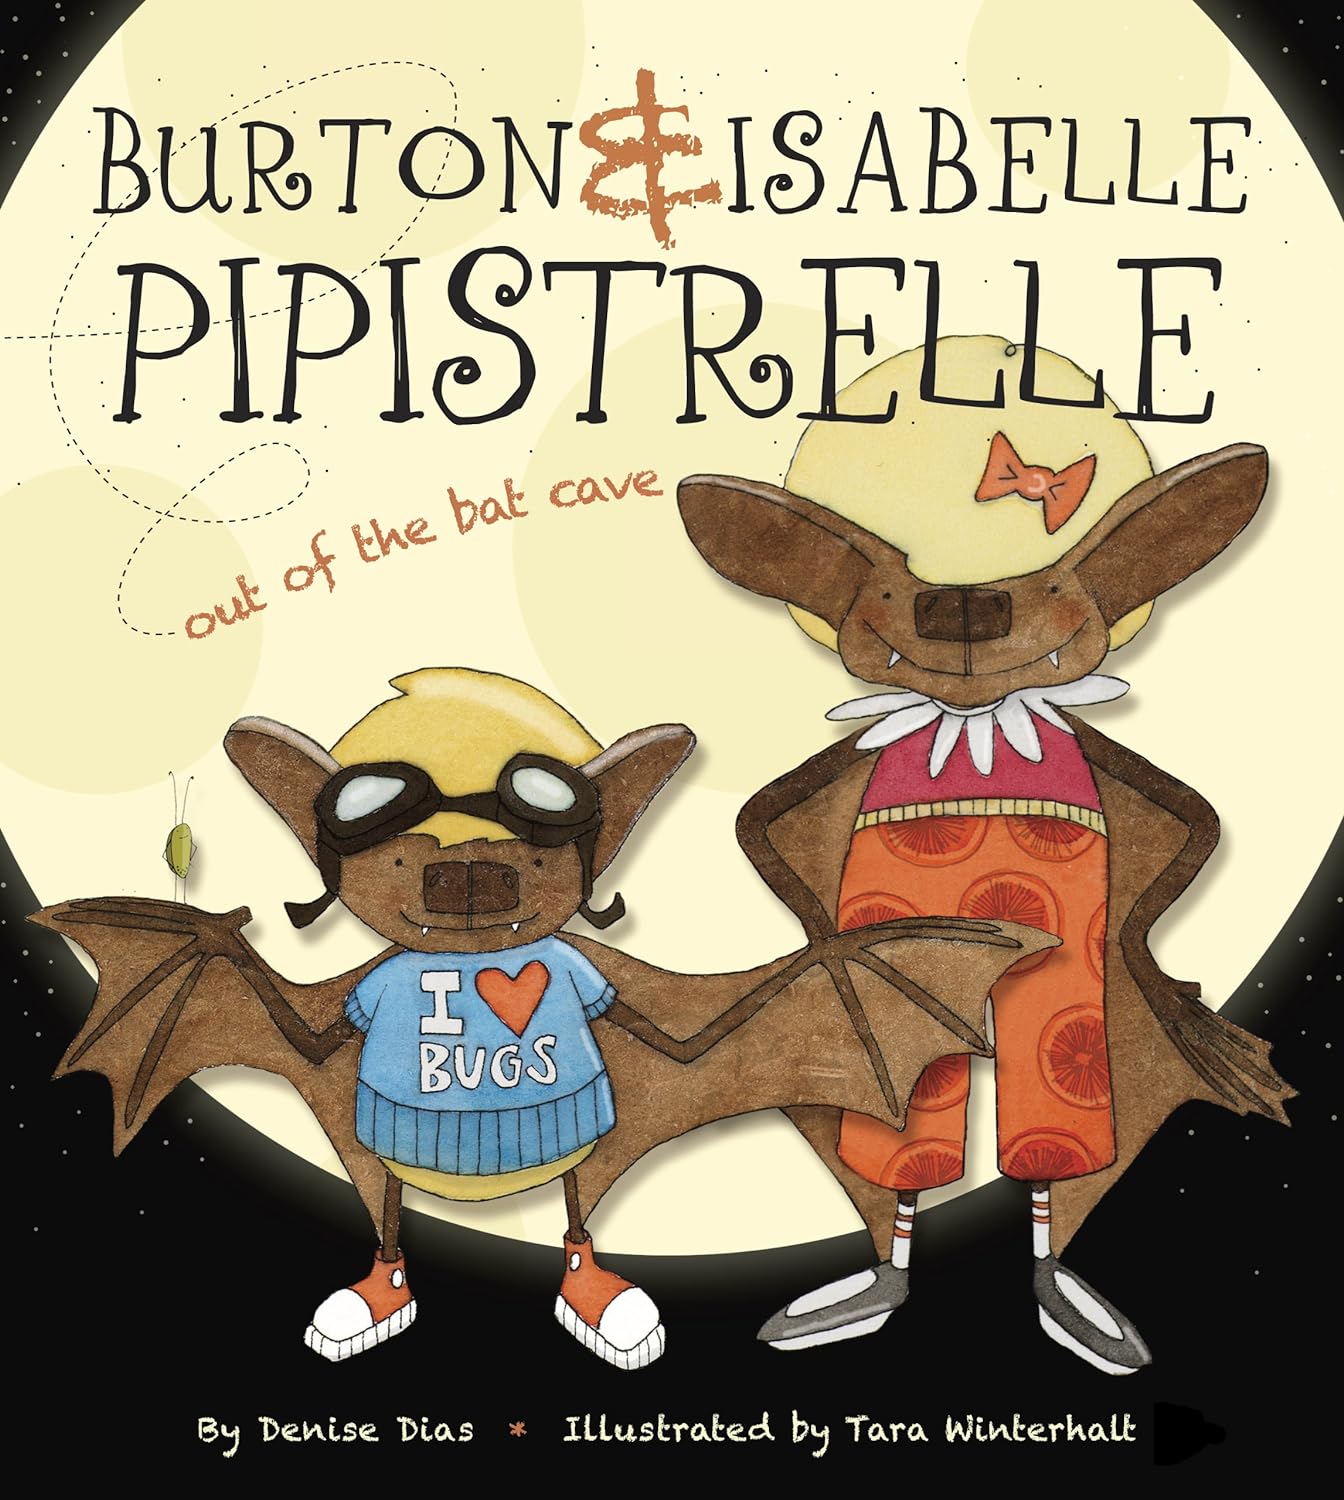 Burton & Isabelle Pipistrelle: Out of the Bat Cave